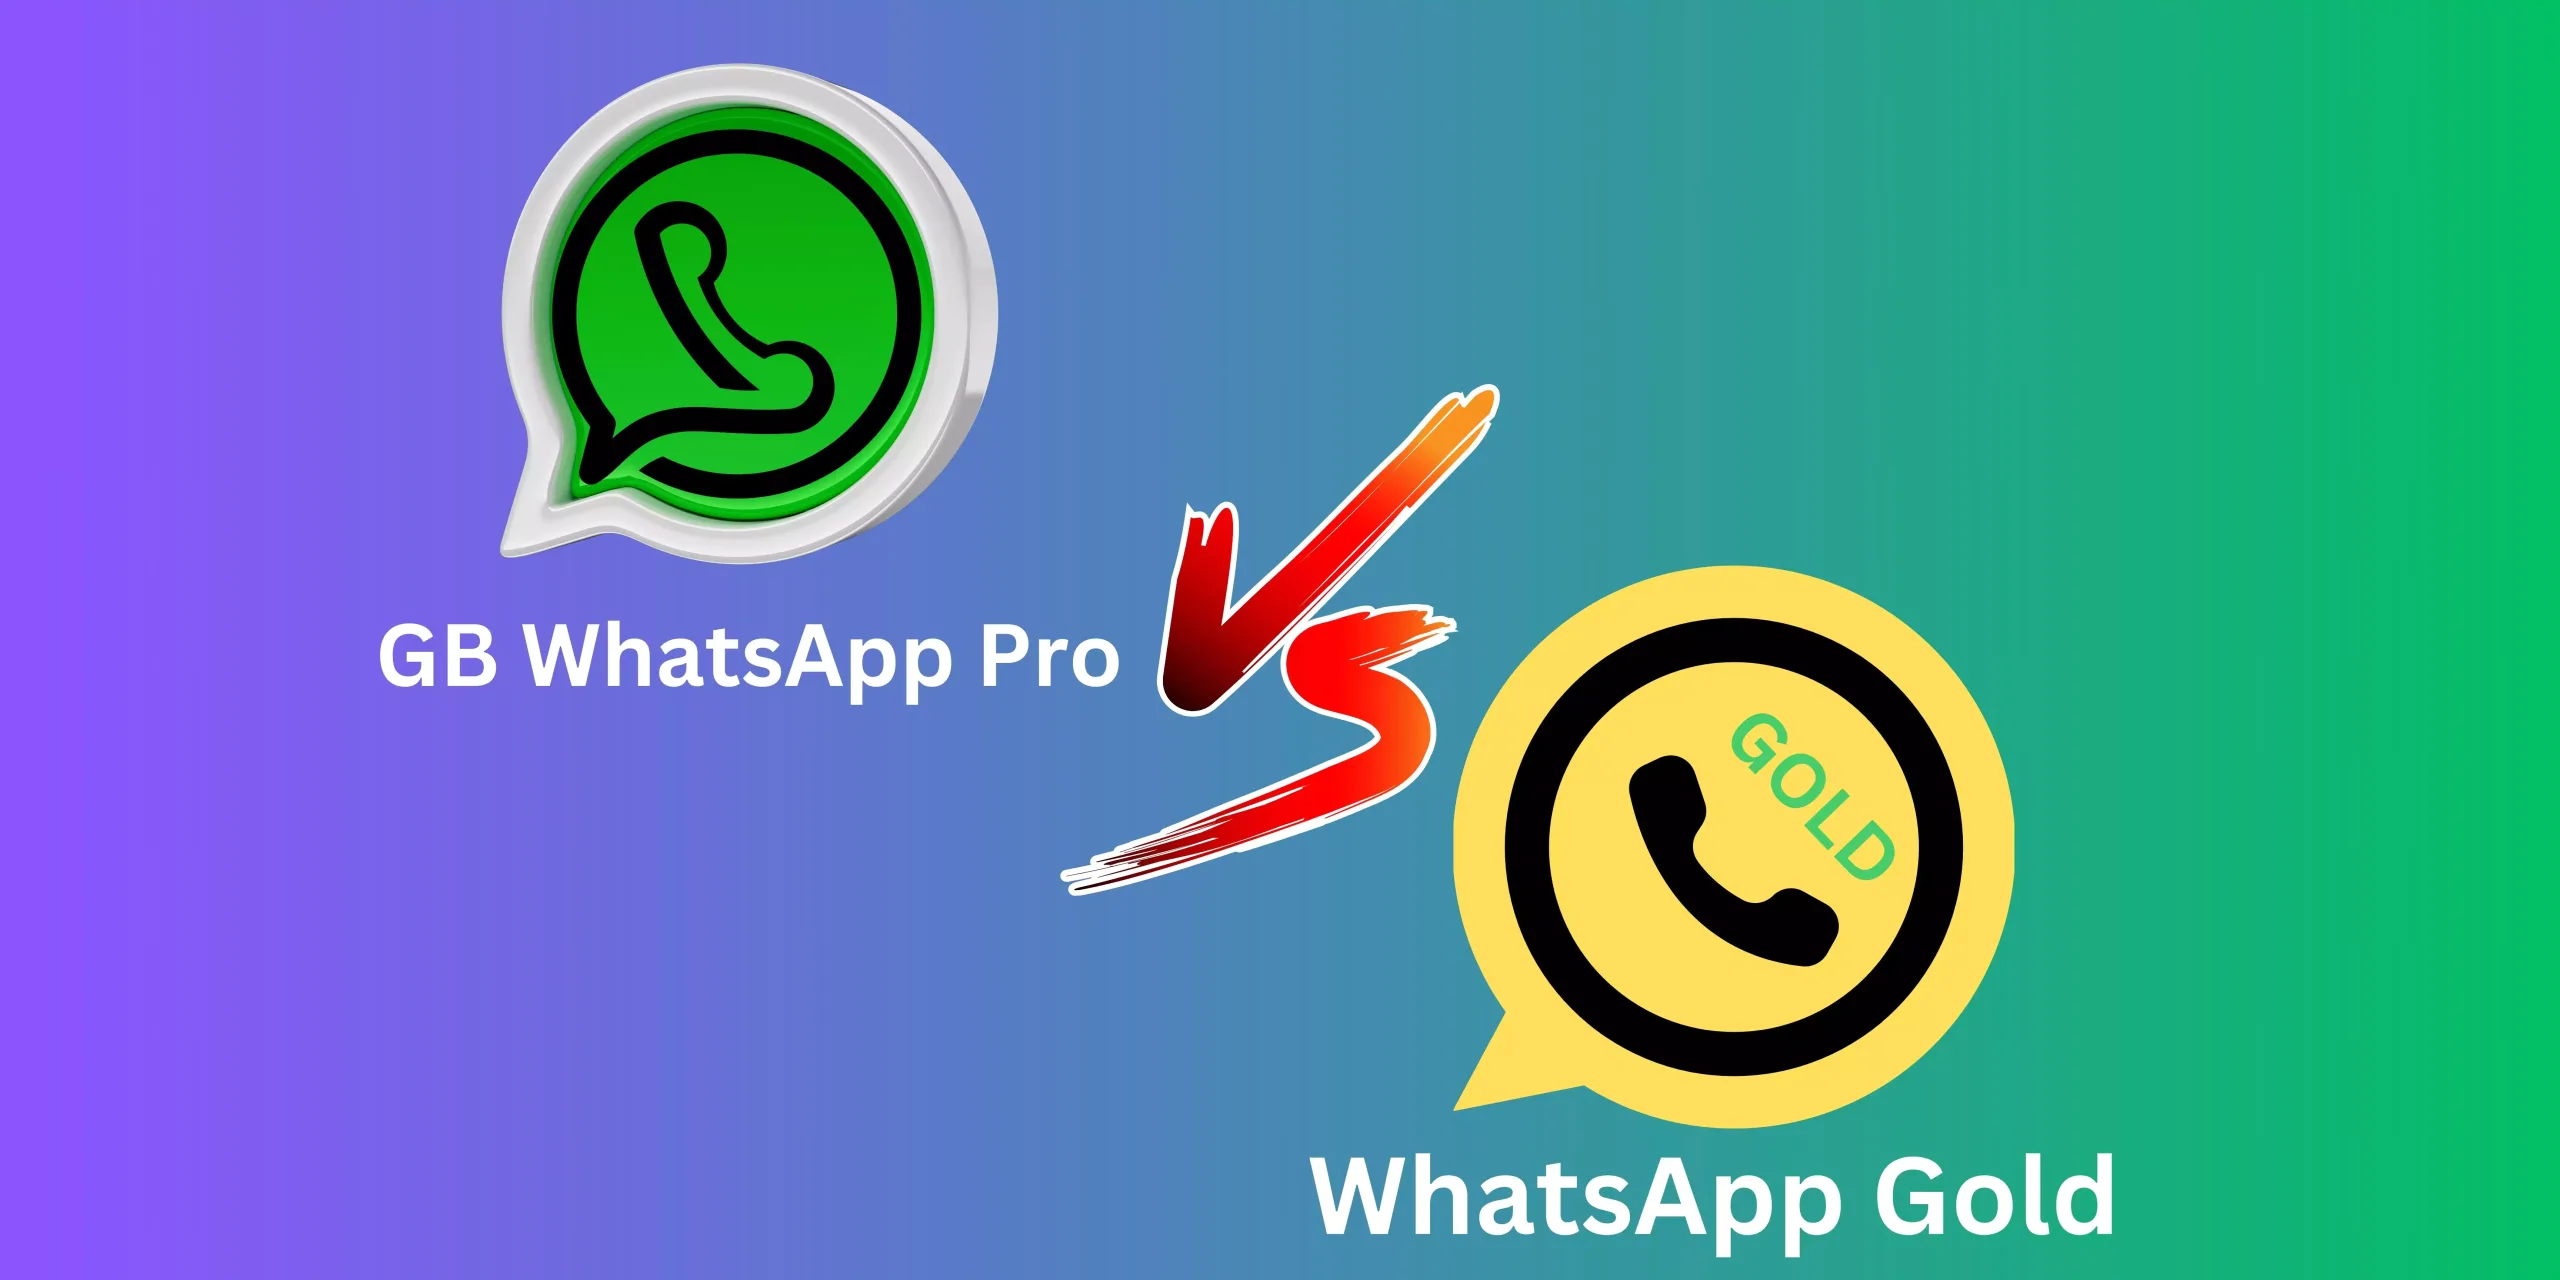 WhatsApp Gold VS GBWhatsApp Pro